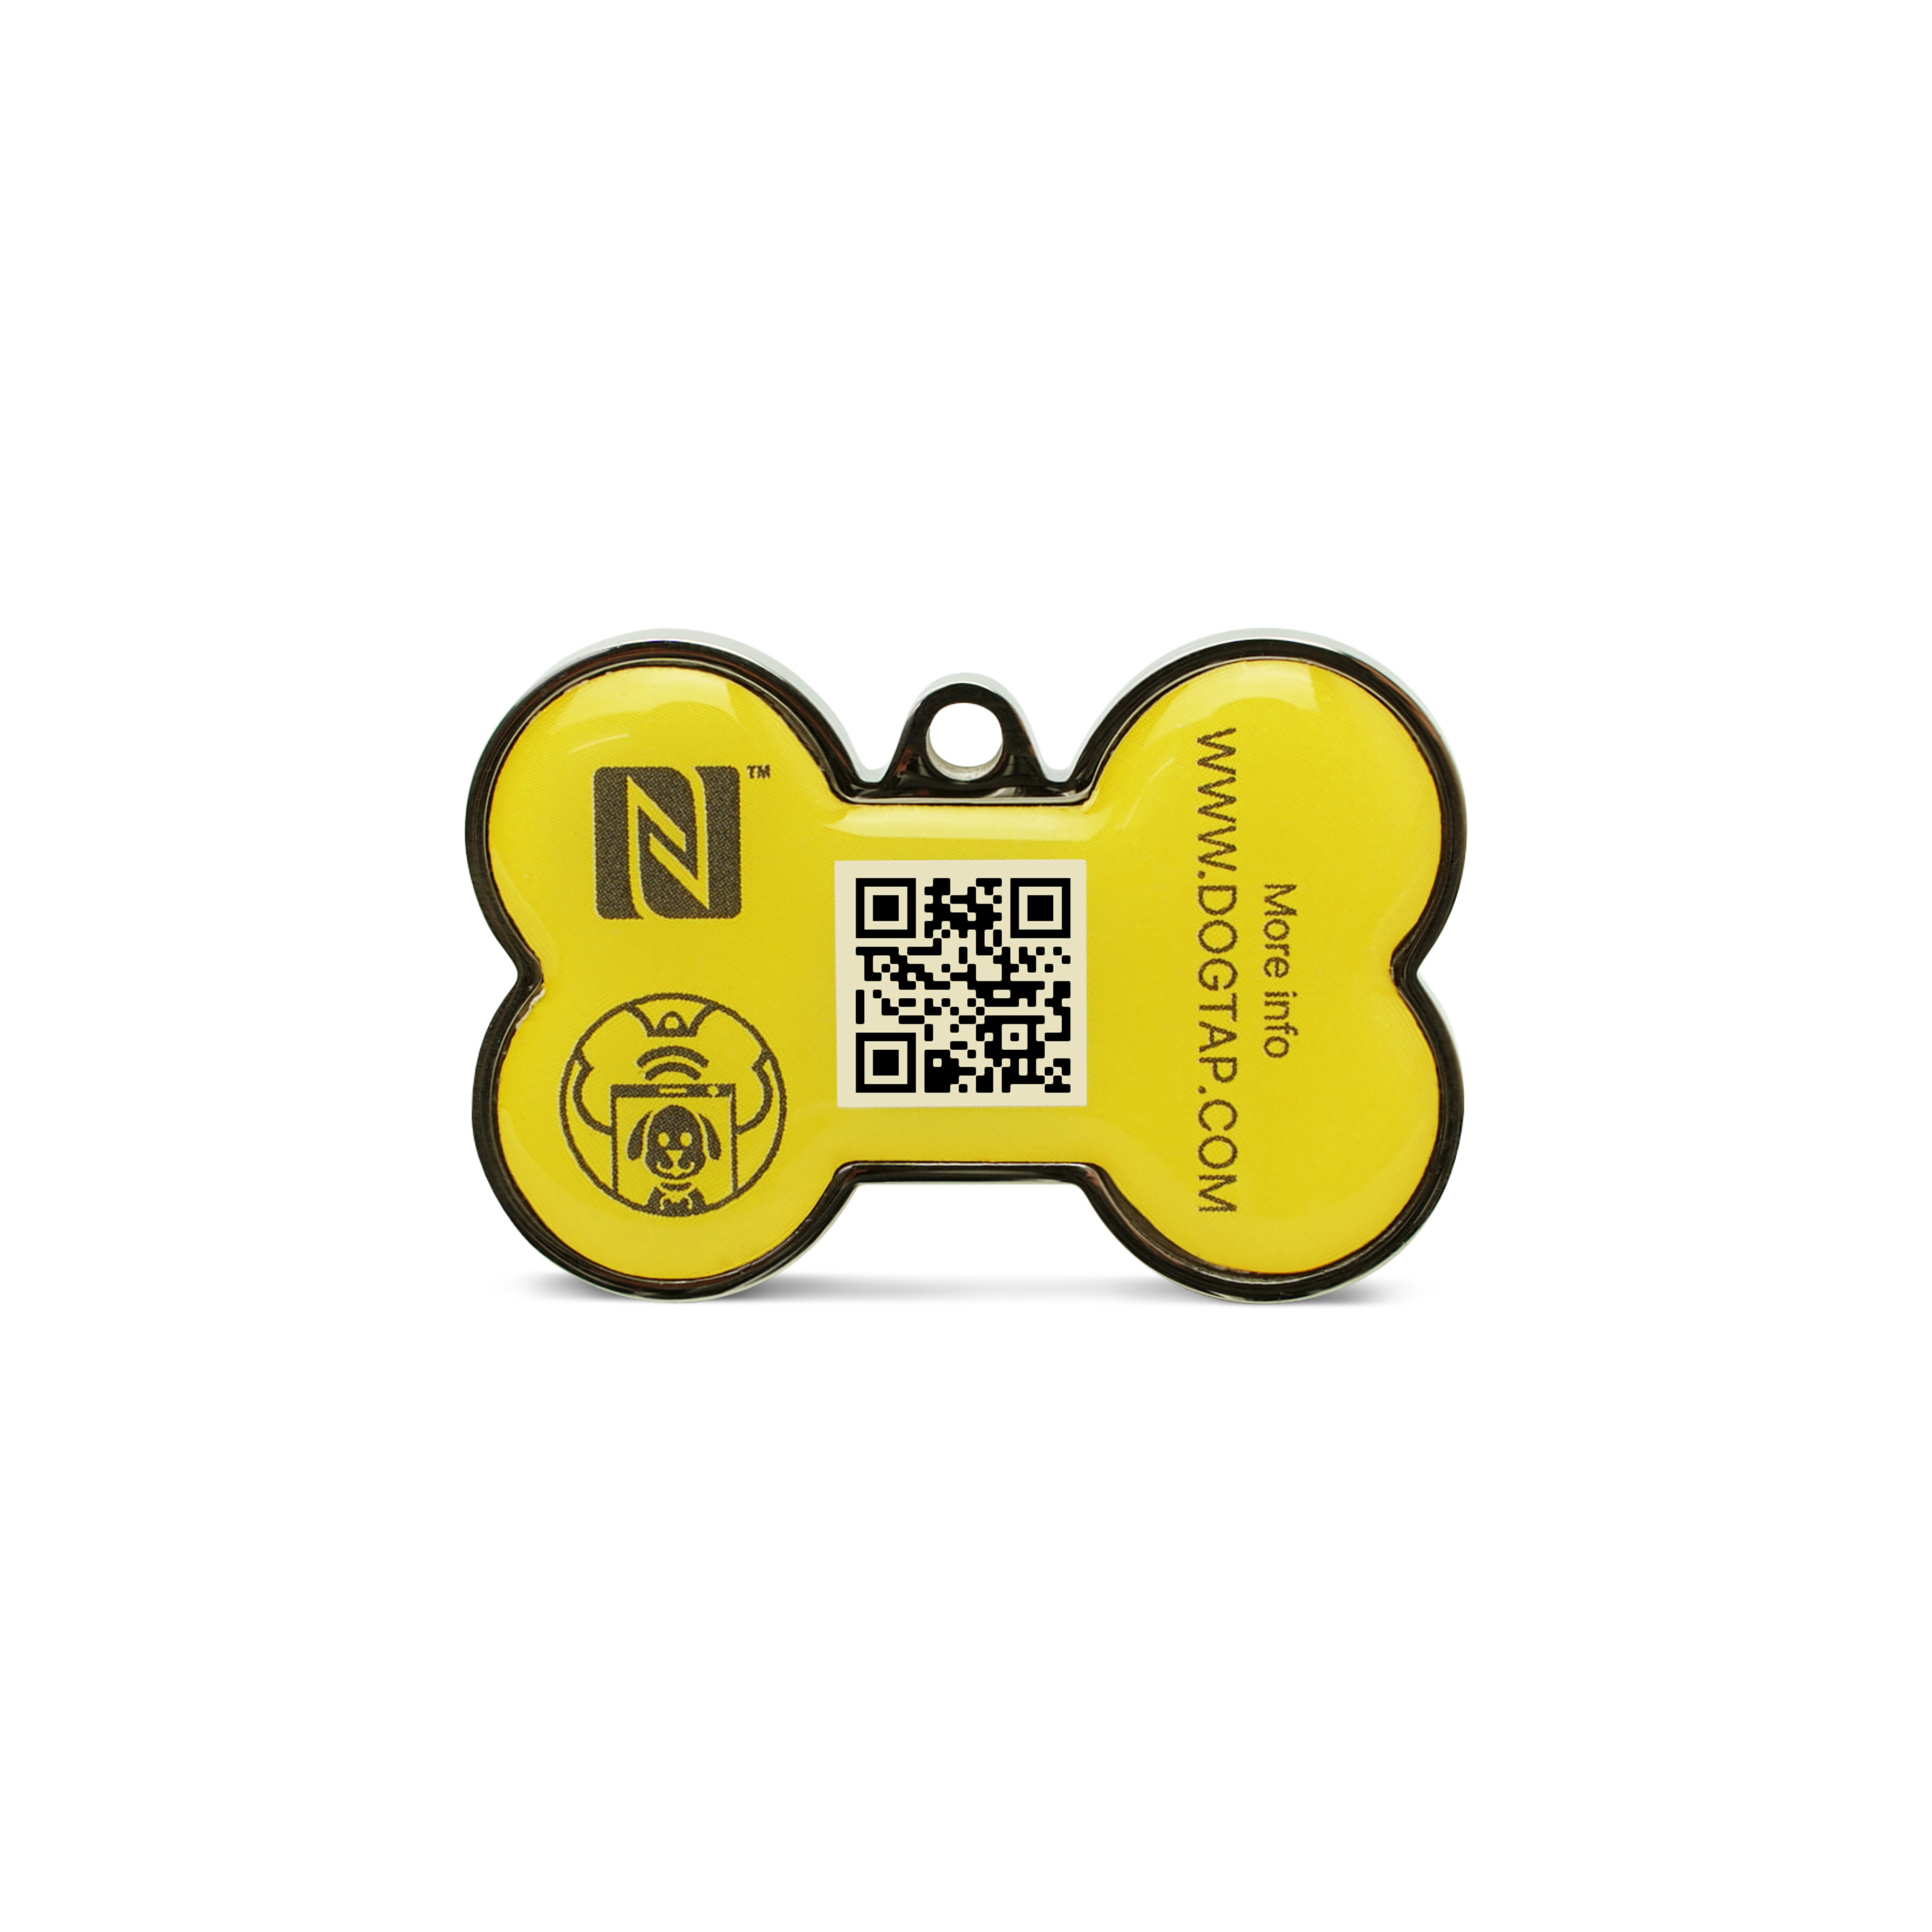 Dogtap Solid - Digital dog tag - PVC / Metal - 41.6 x 28.5 x 4.6 mm - yellow